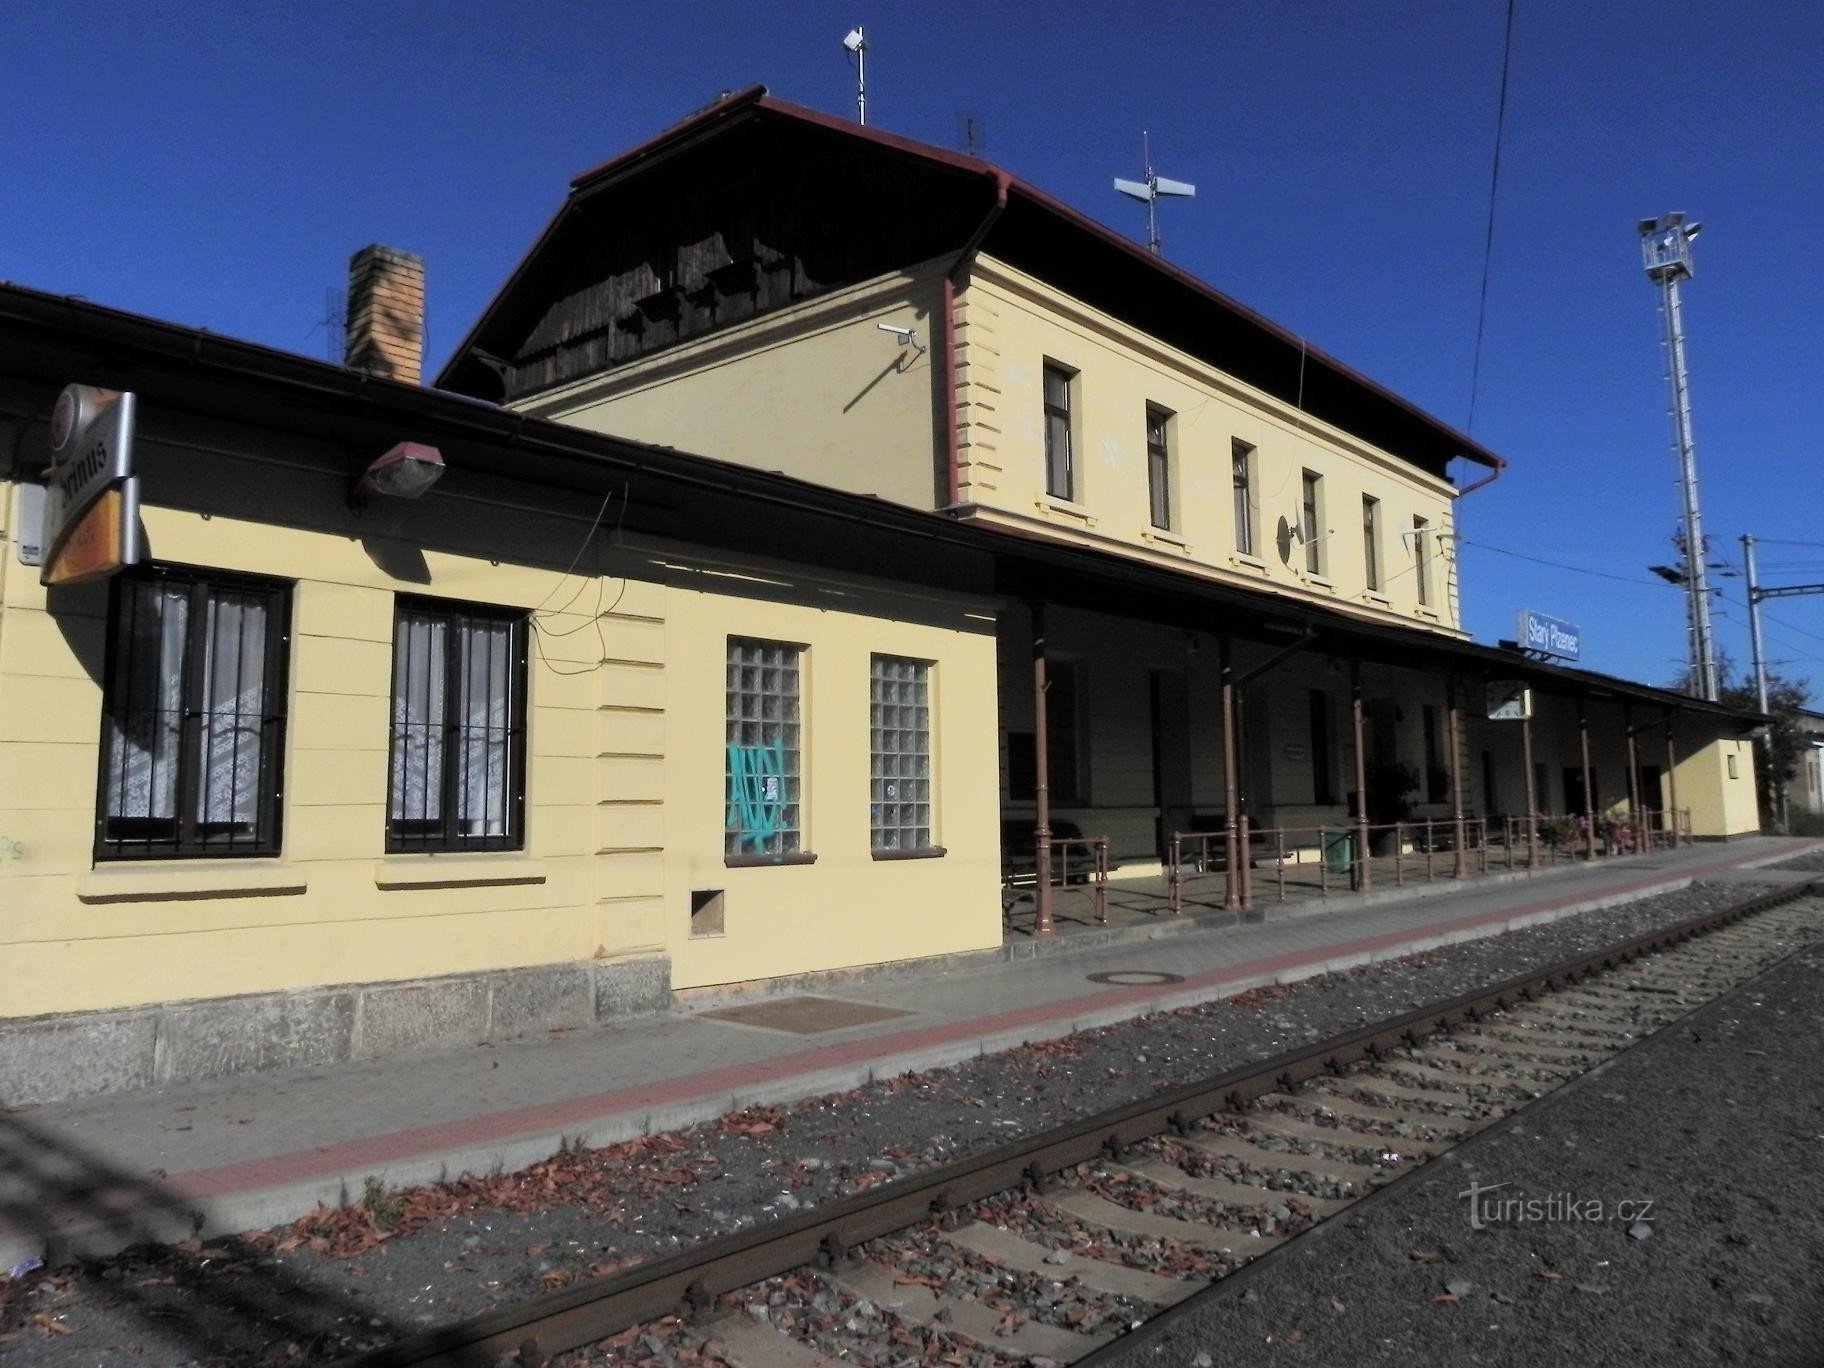 Starý Plzenec, railway station